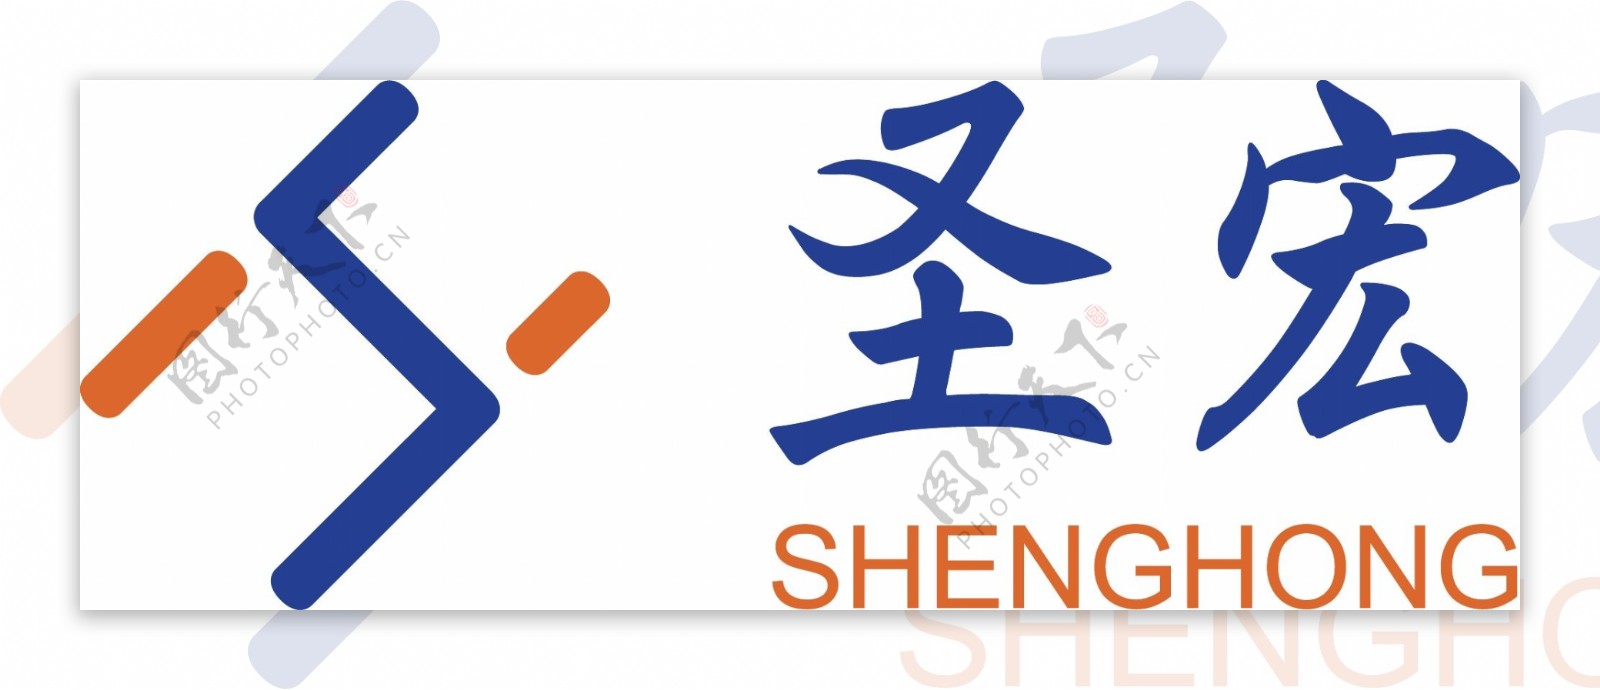 圣宏logo1